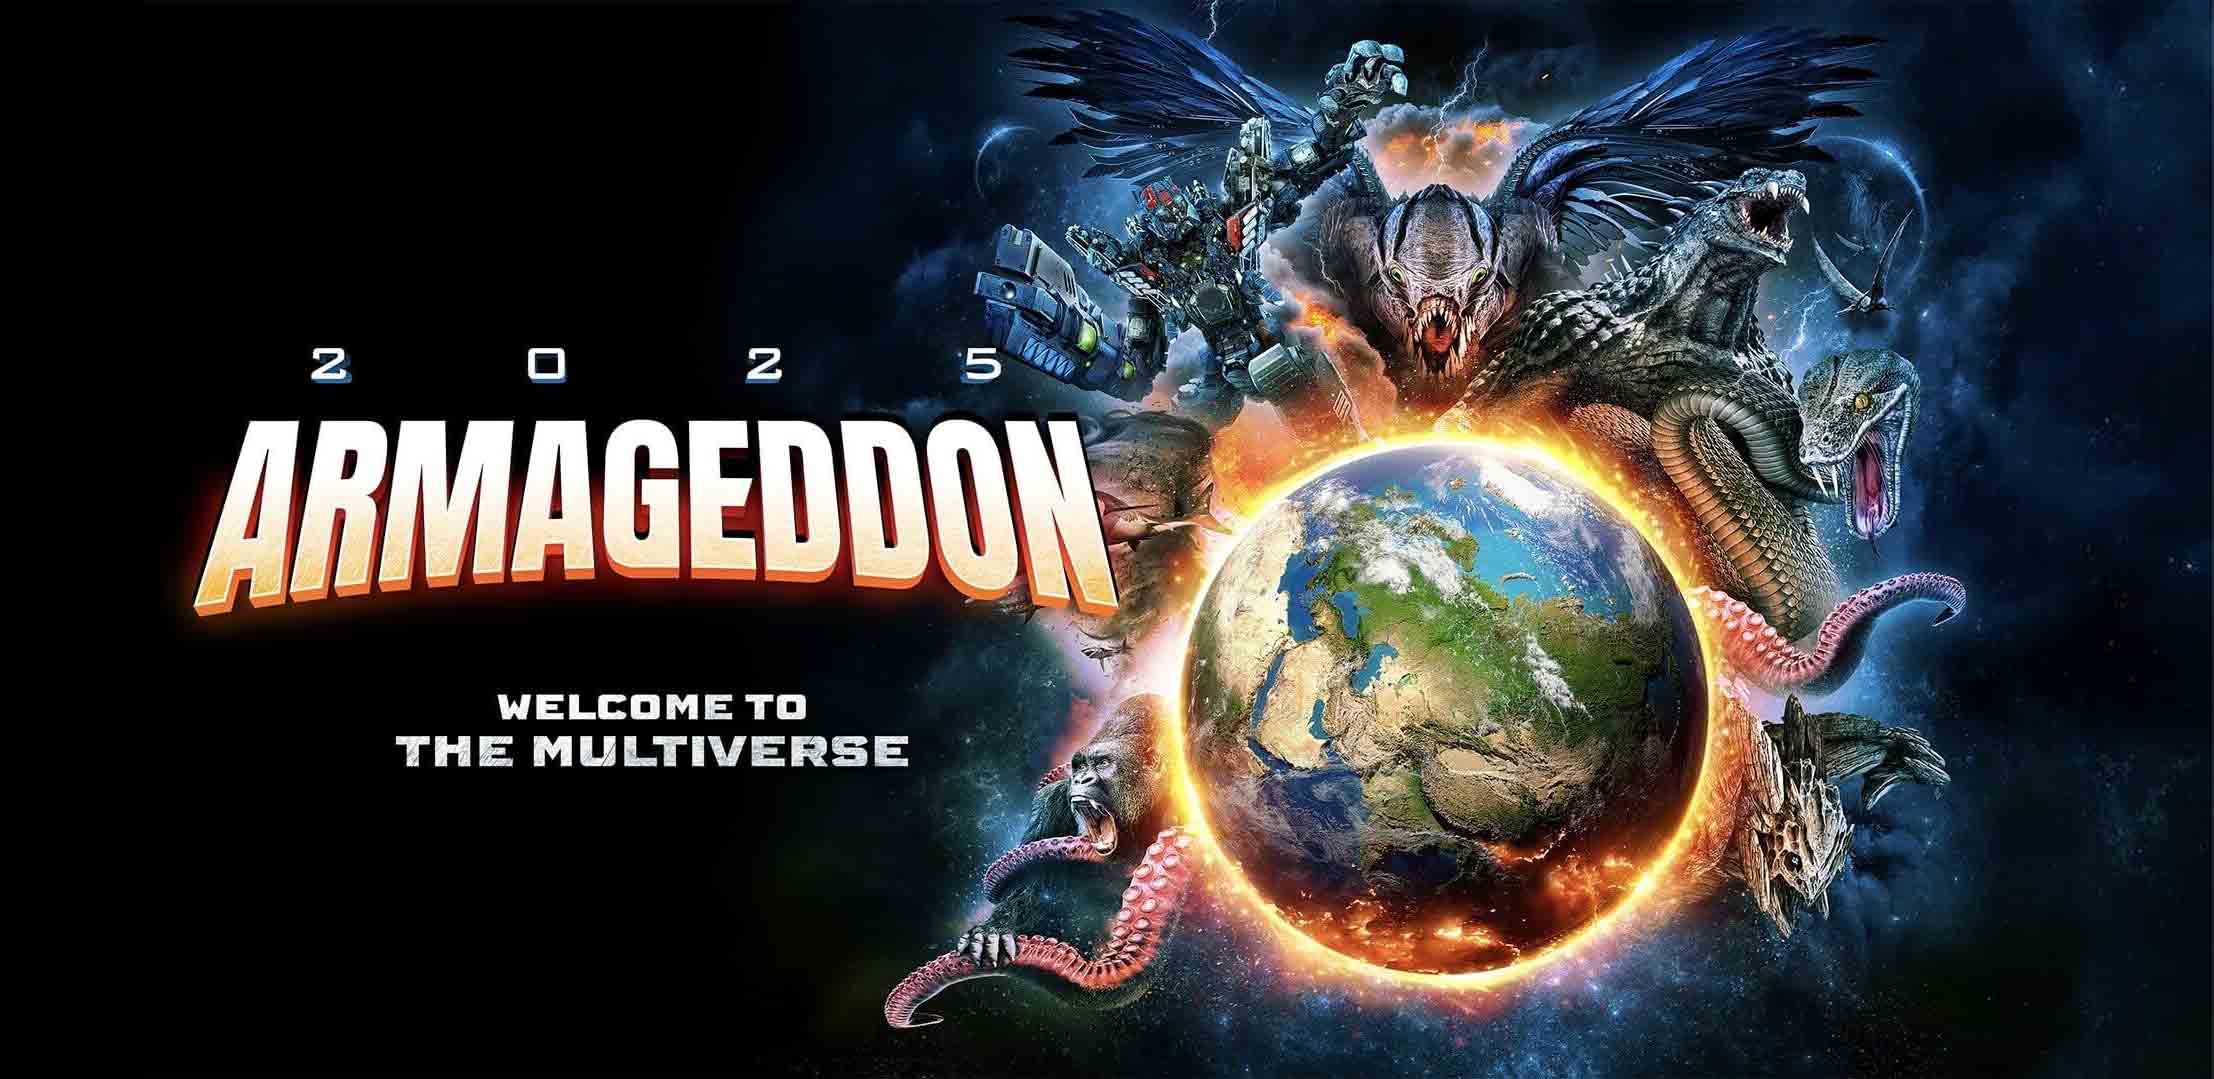 armageddon movie review 2022